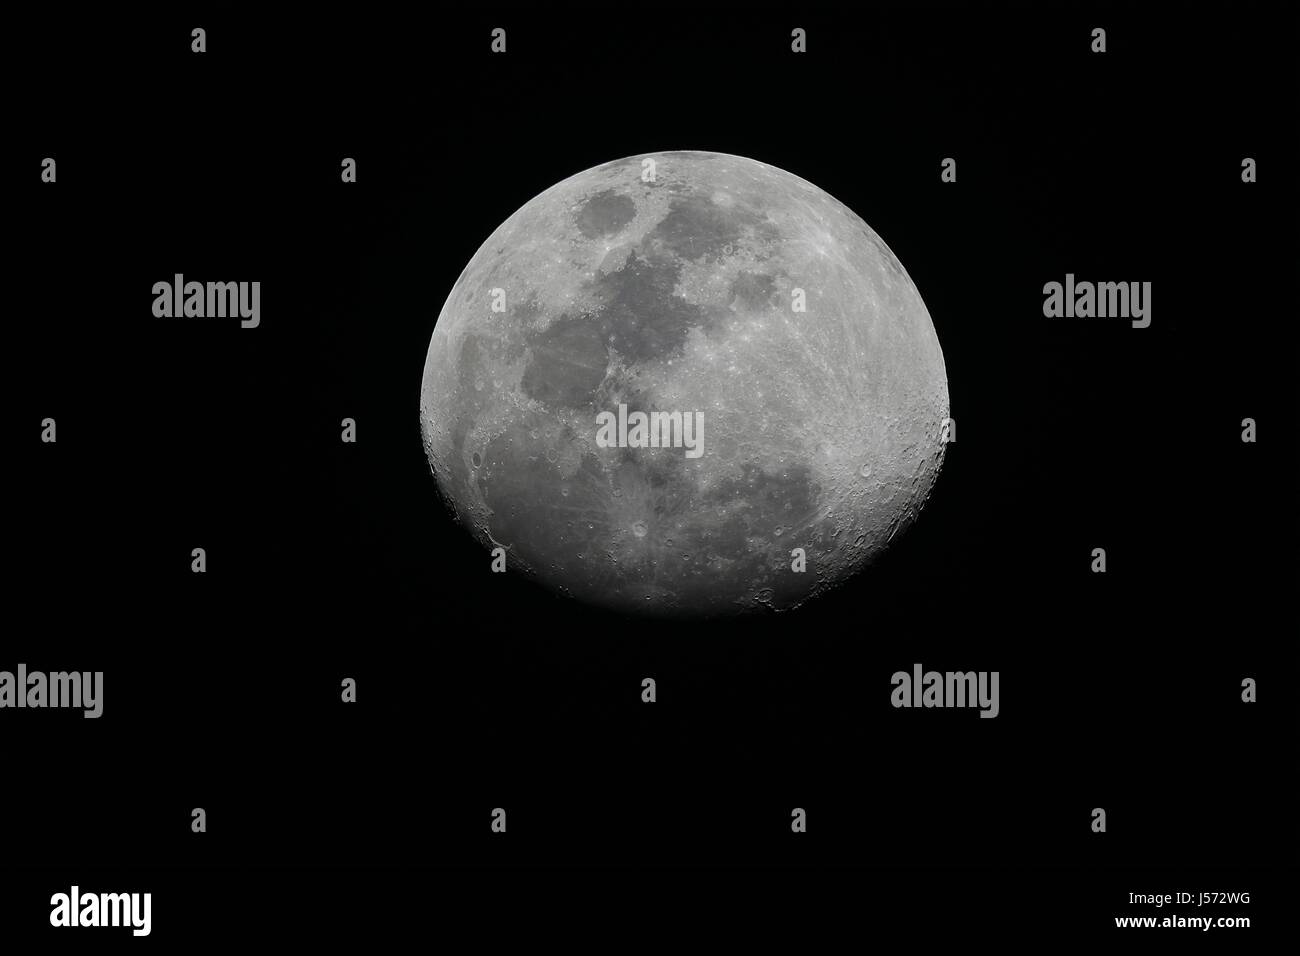 the moon Waxing gibbous 90% illuminated Stock Photo